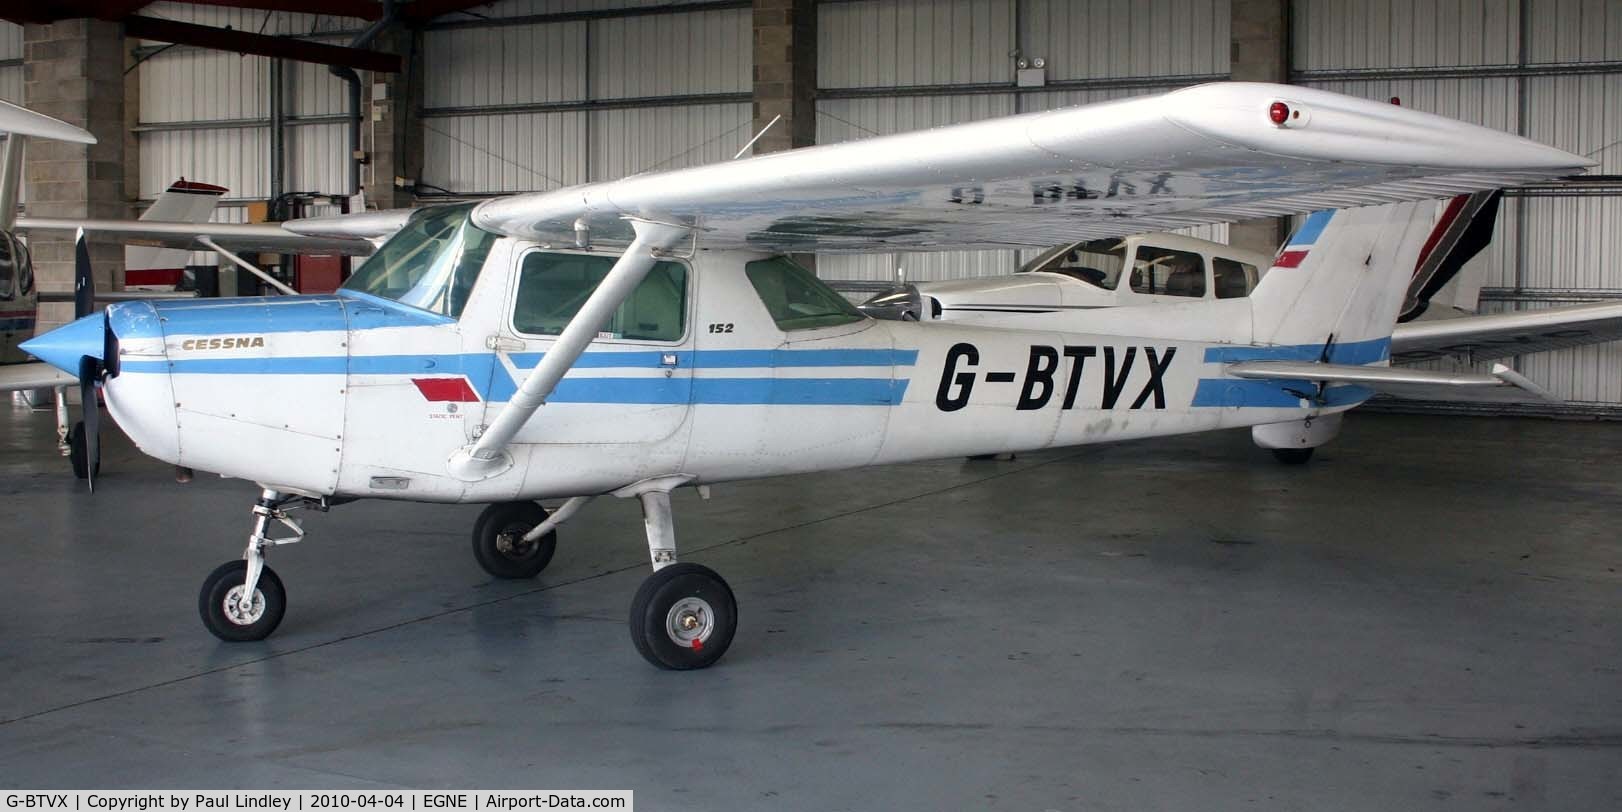 G-BTVX, 1979 Cessna 152 C/N 152-83375, under cover